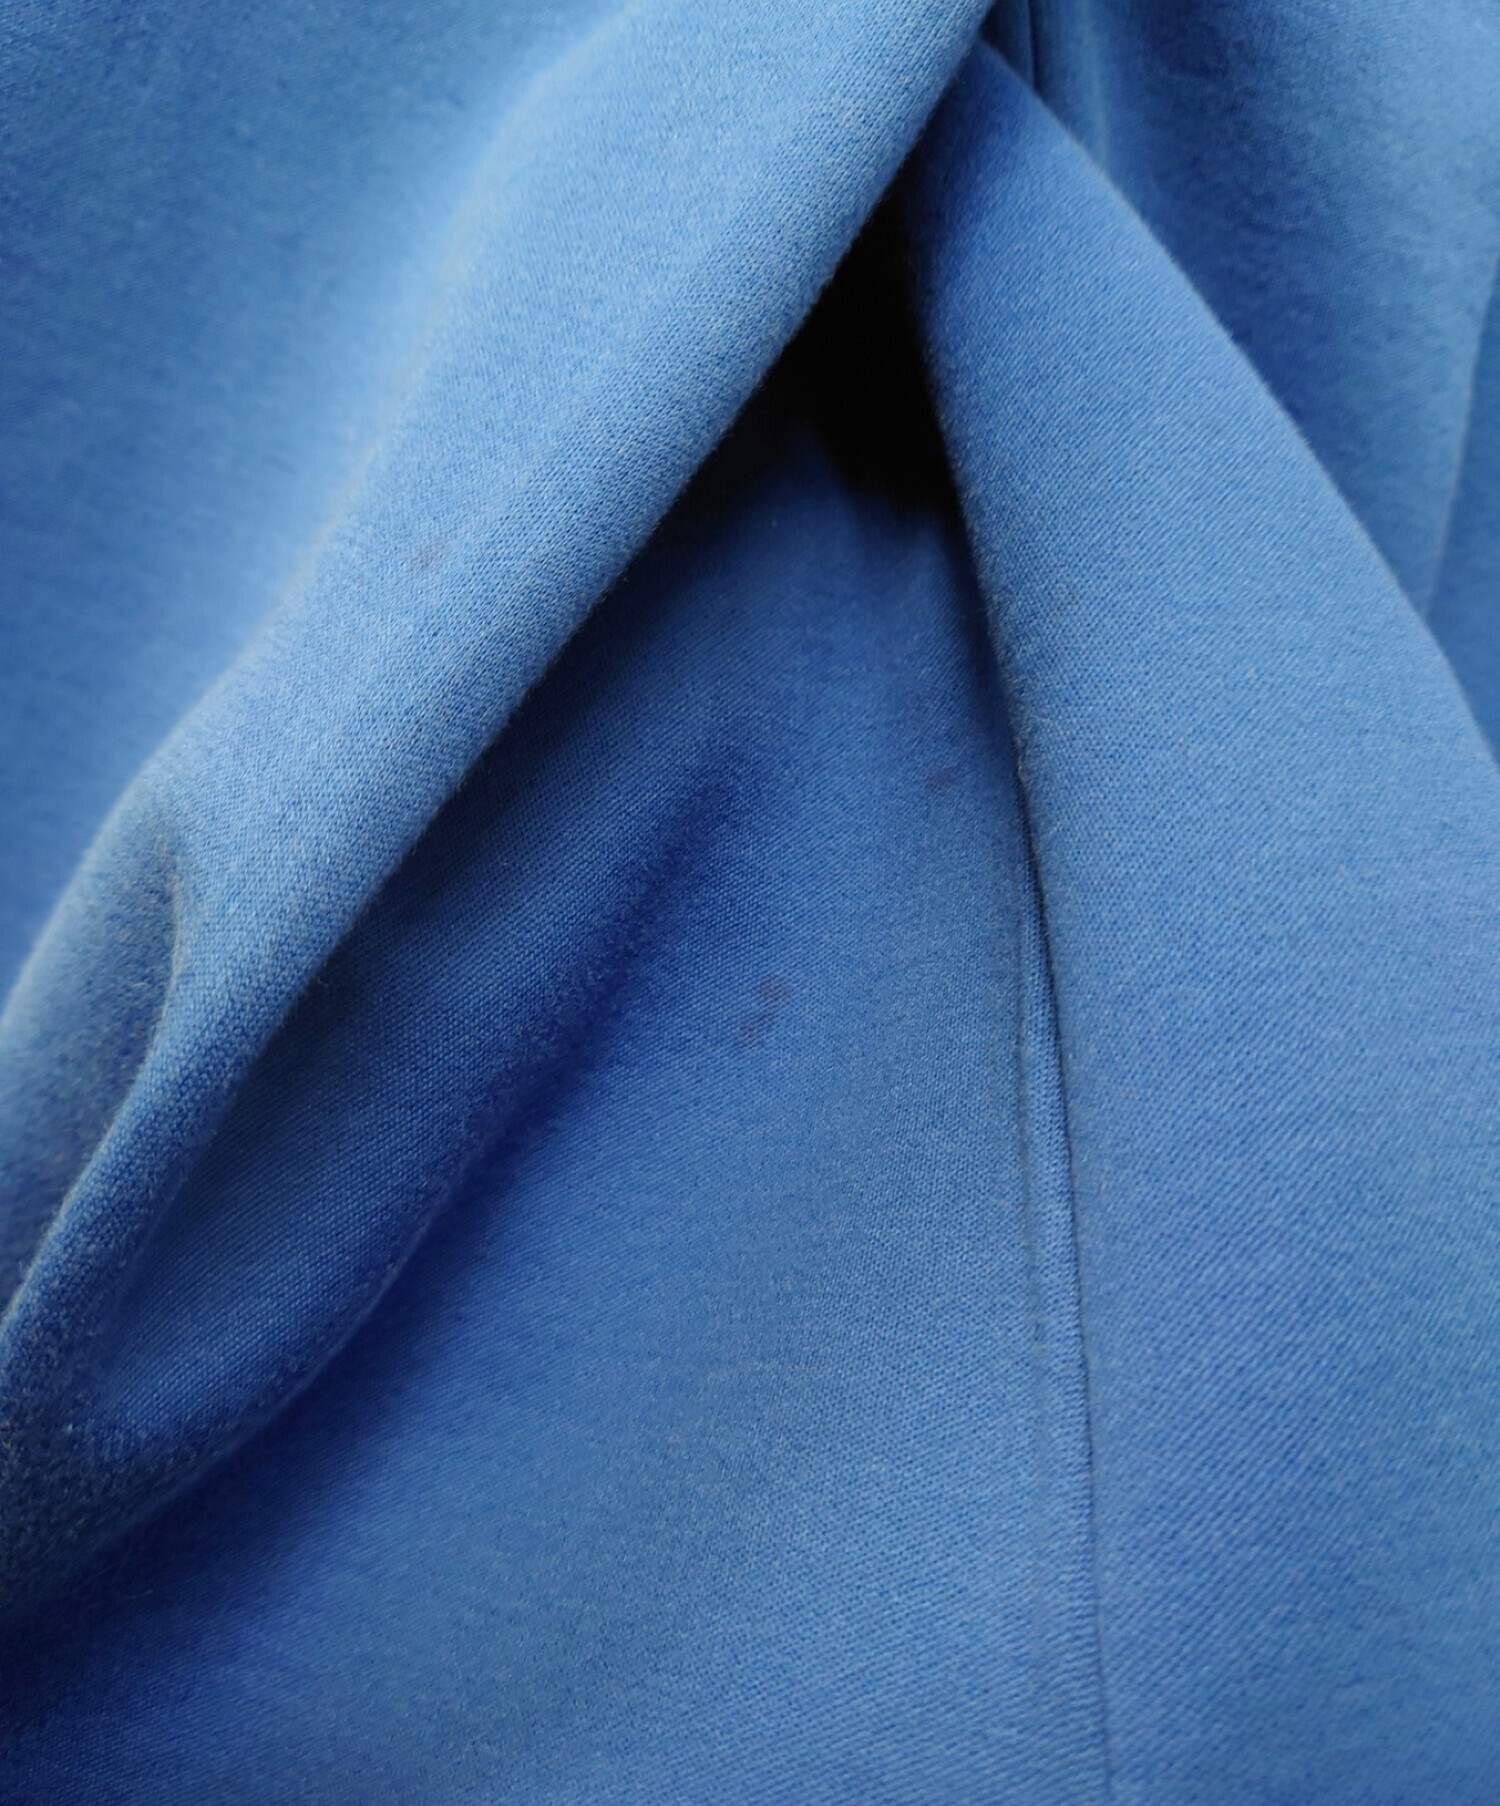 MARNI (マルニ) ブラックテクノコットンプリーツスカート ブルー サイズ:38